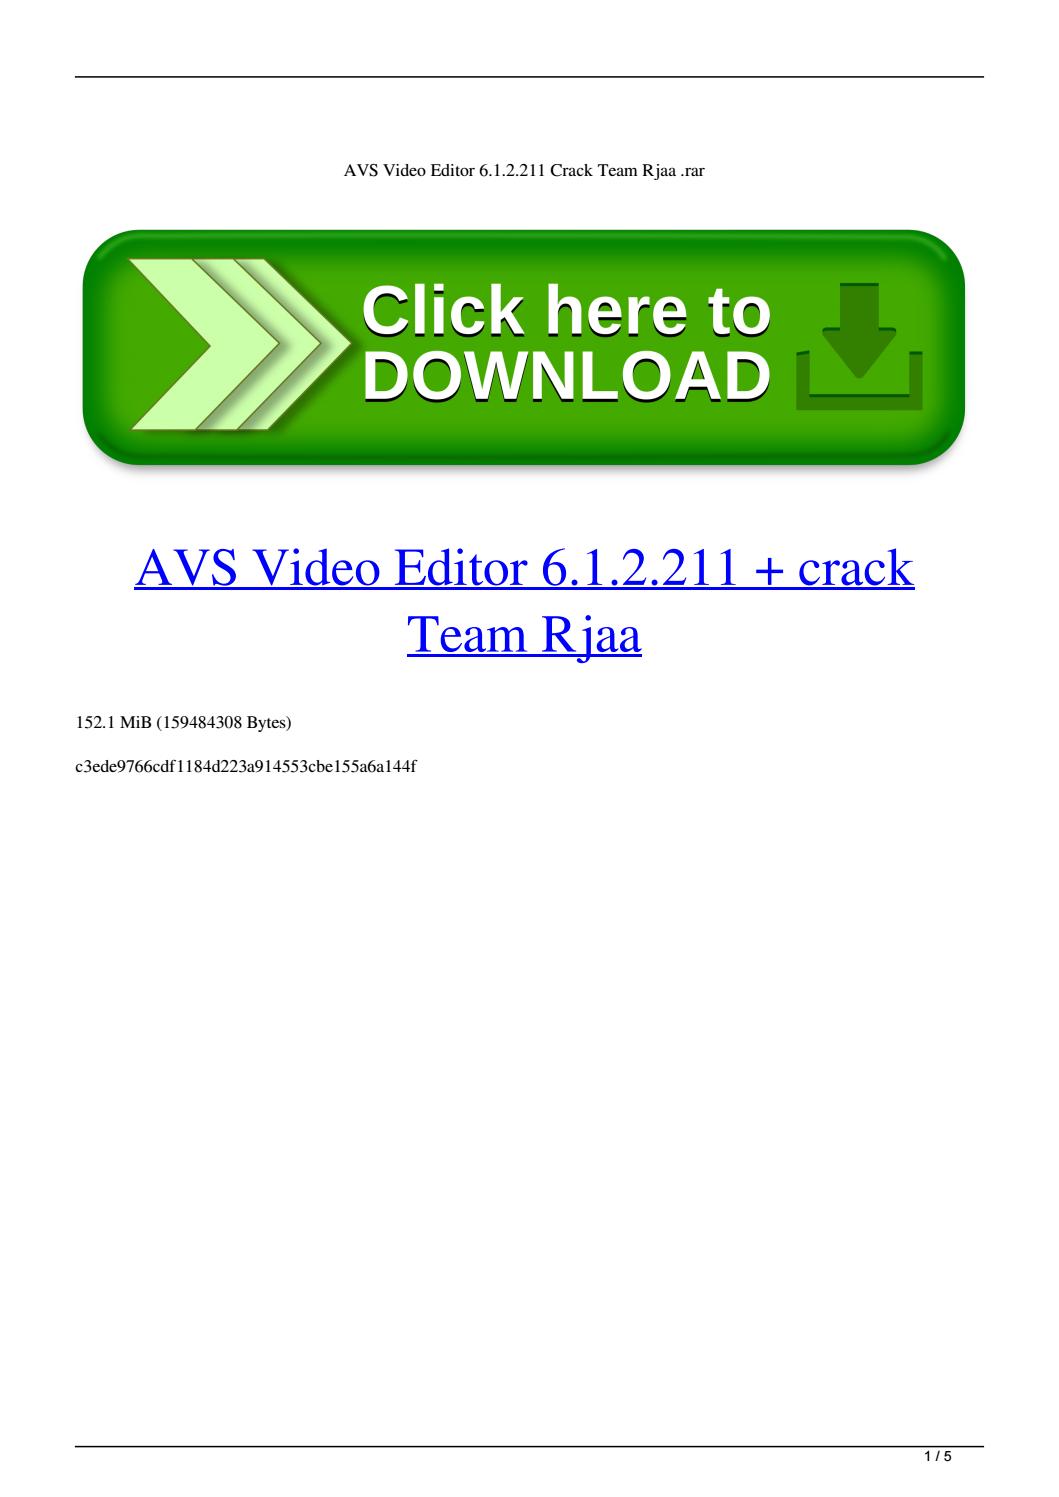 avs video converter 9.1 activation code